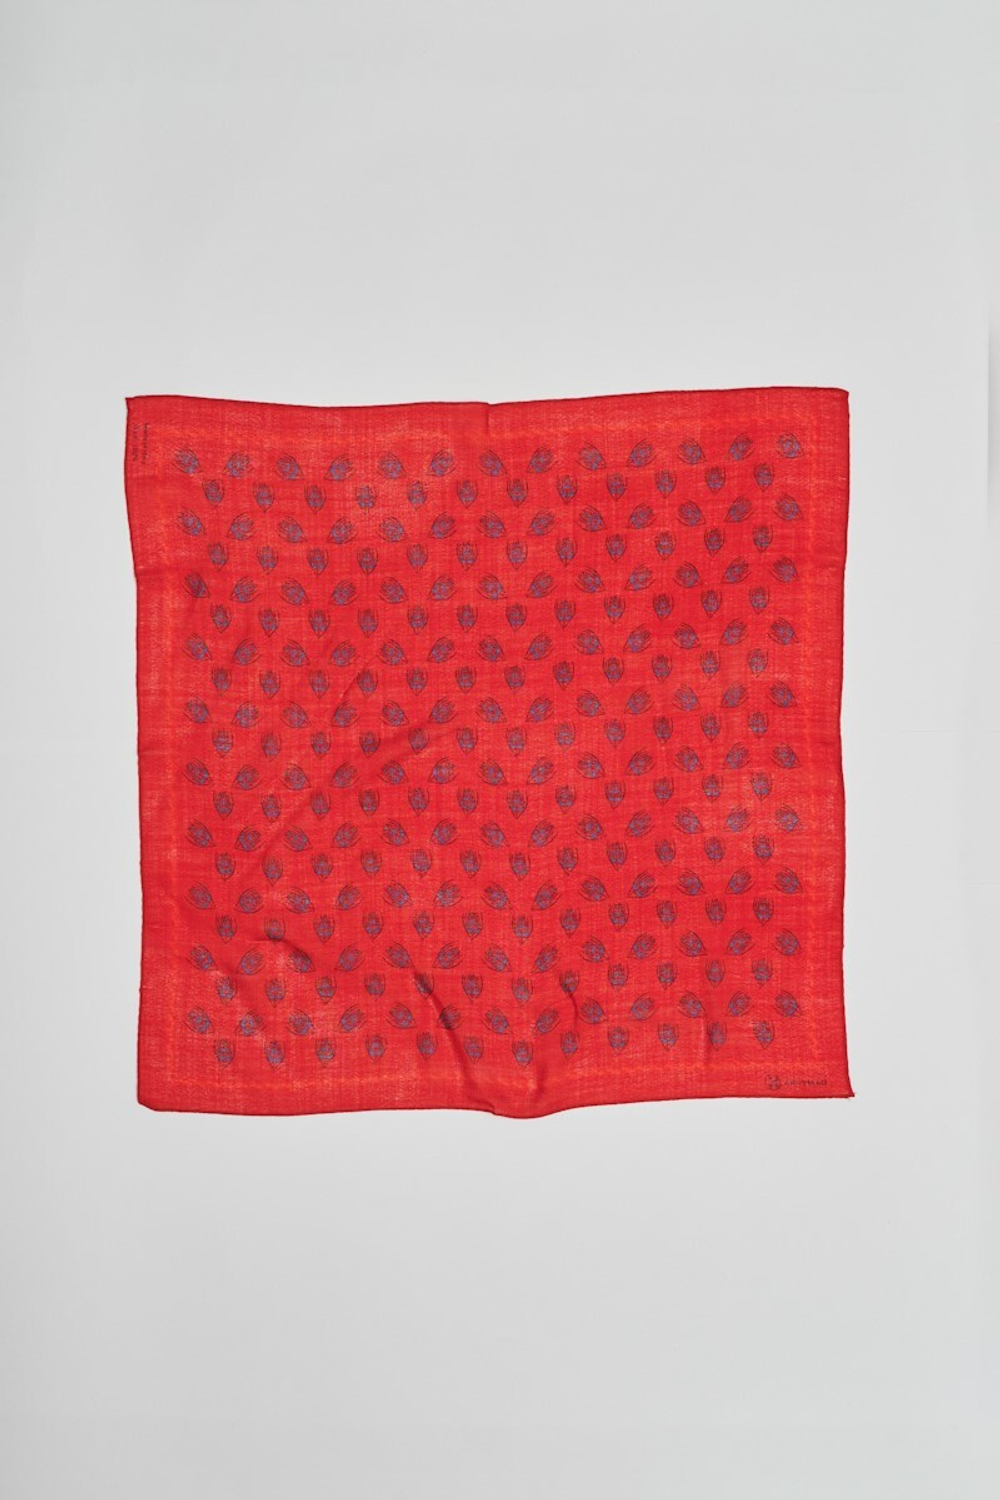 Шерстяной платок Ласточка и тюльпан RED 70×70